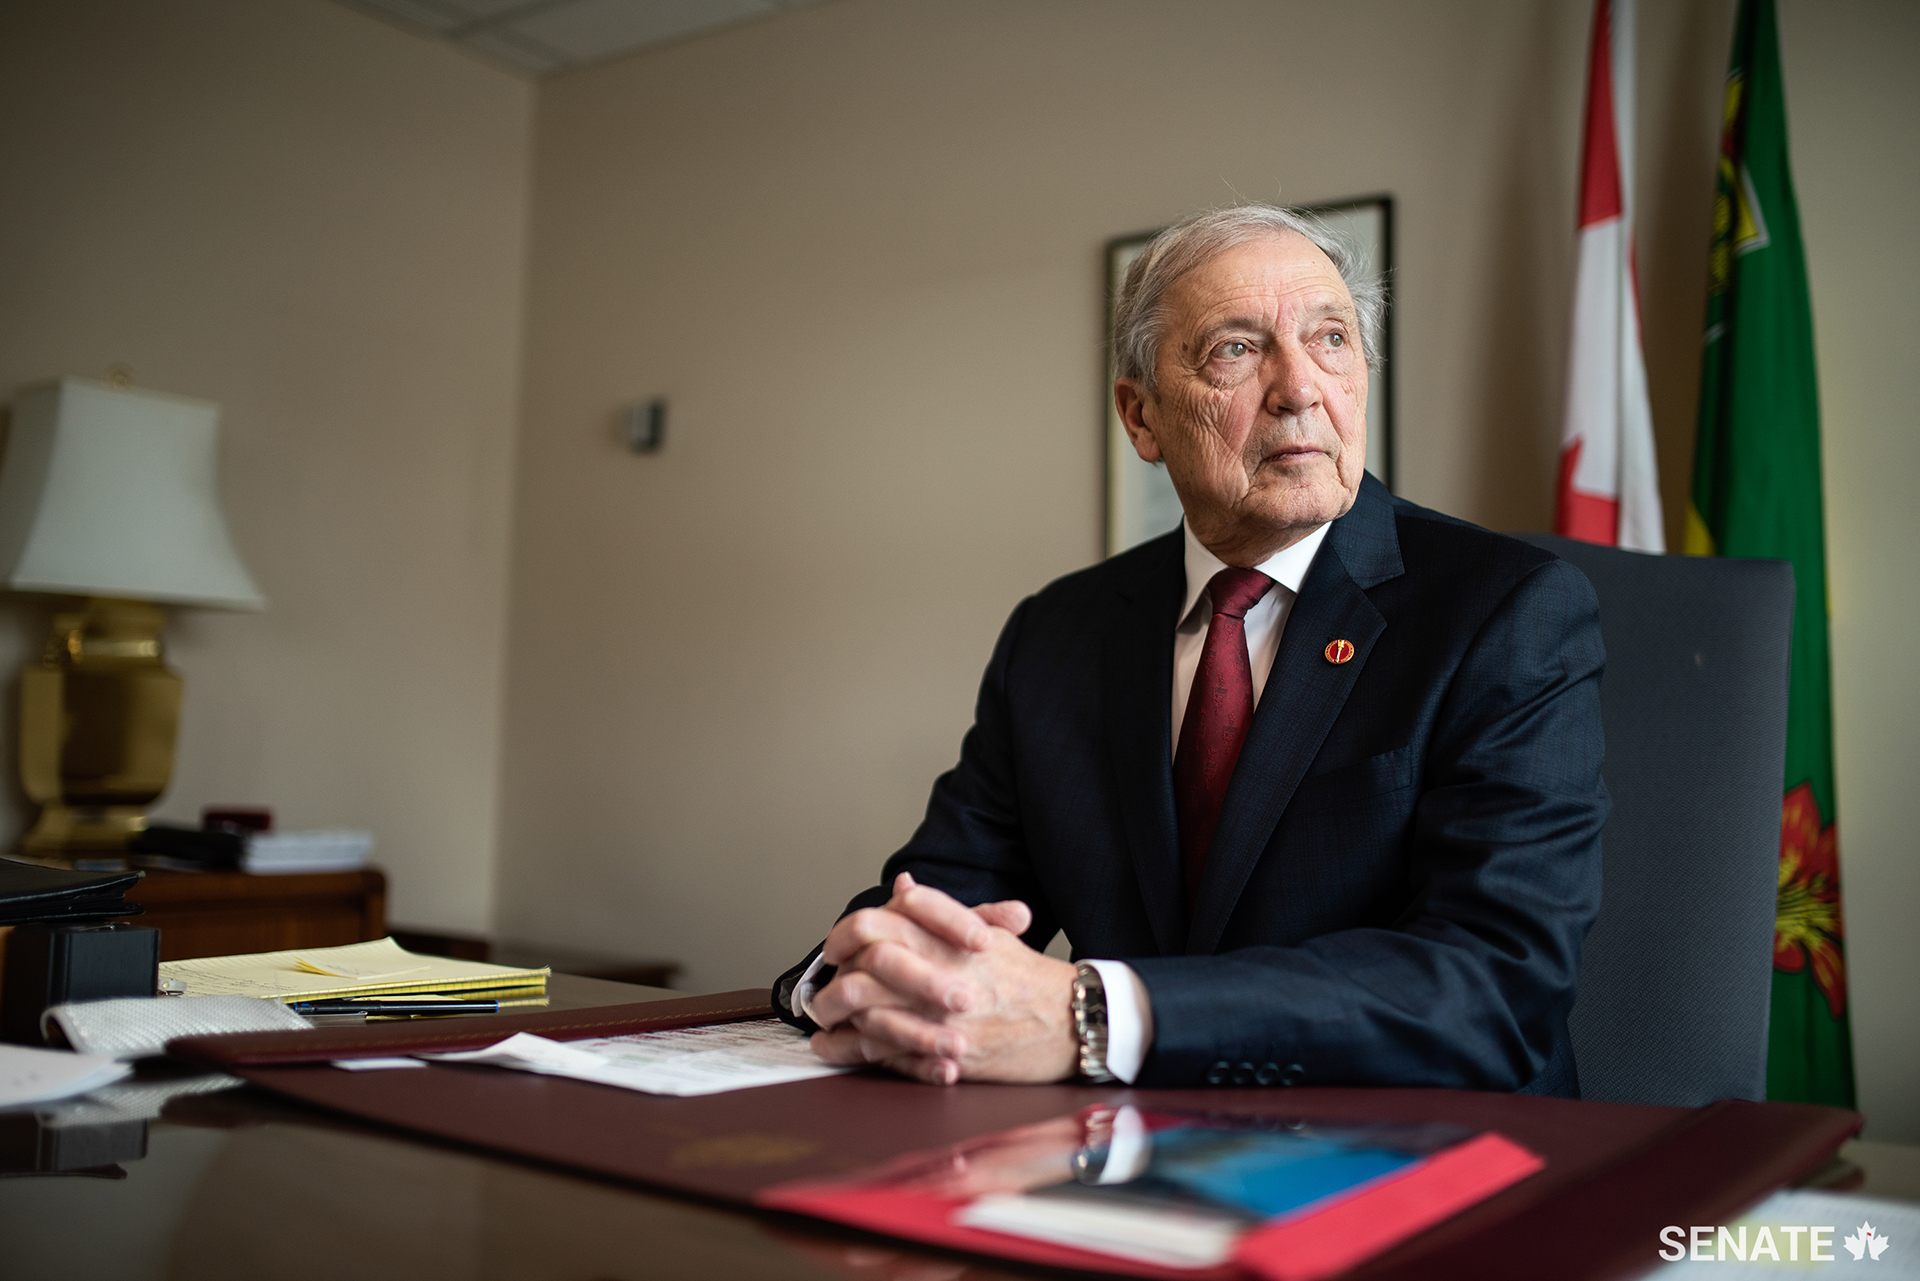 Senator David Tkachuk spent 26 years representing Saskatchewan on Parliament Hill.